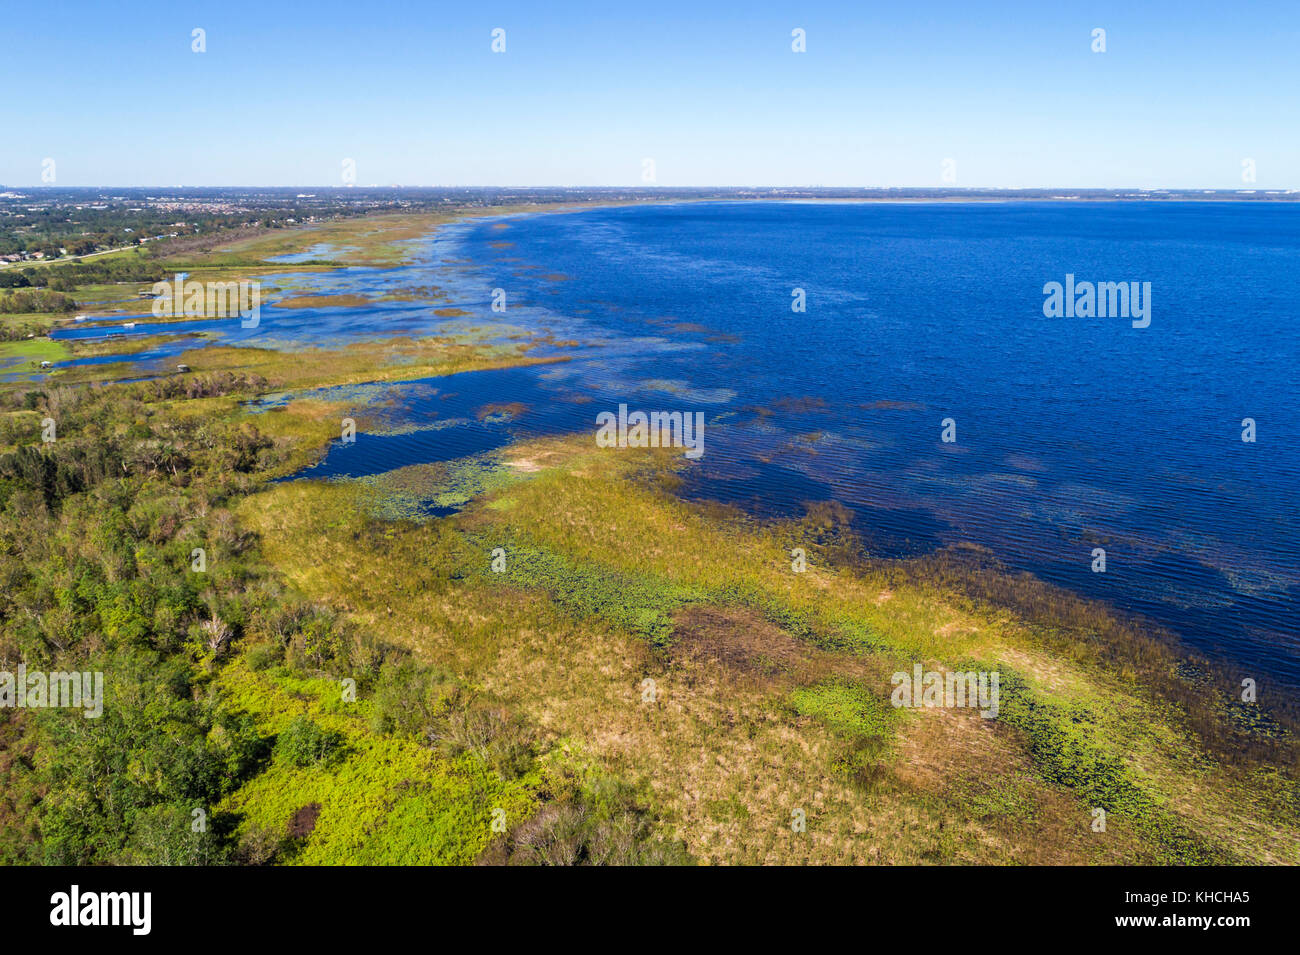 Saint St. Cloud Florida,East Lake Tohopekaliga,Lakefront Park,water,aerial overhead view,USA US United States America North American,FL17103008d Stock Photo